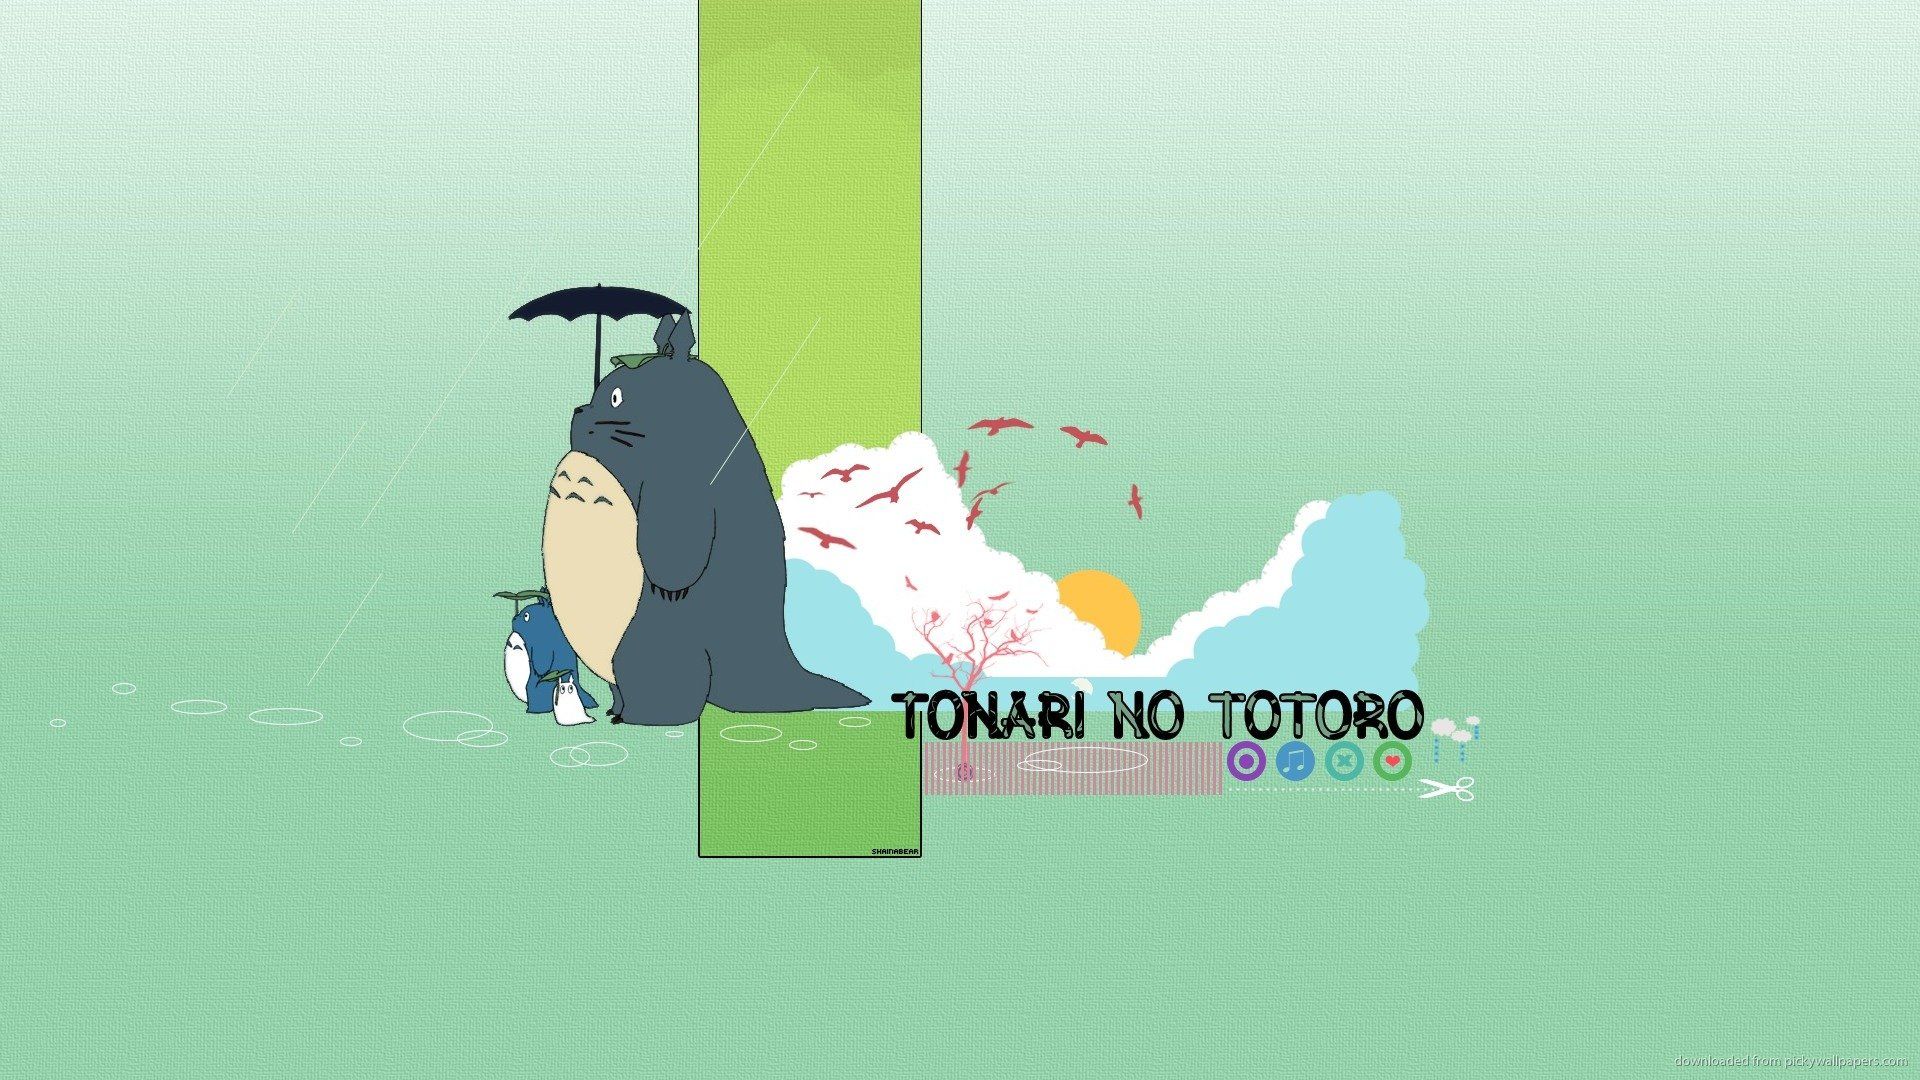 Tonari no totoro wallpaperx1080